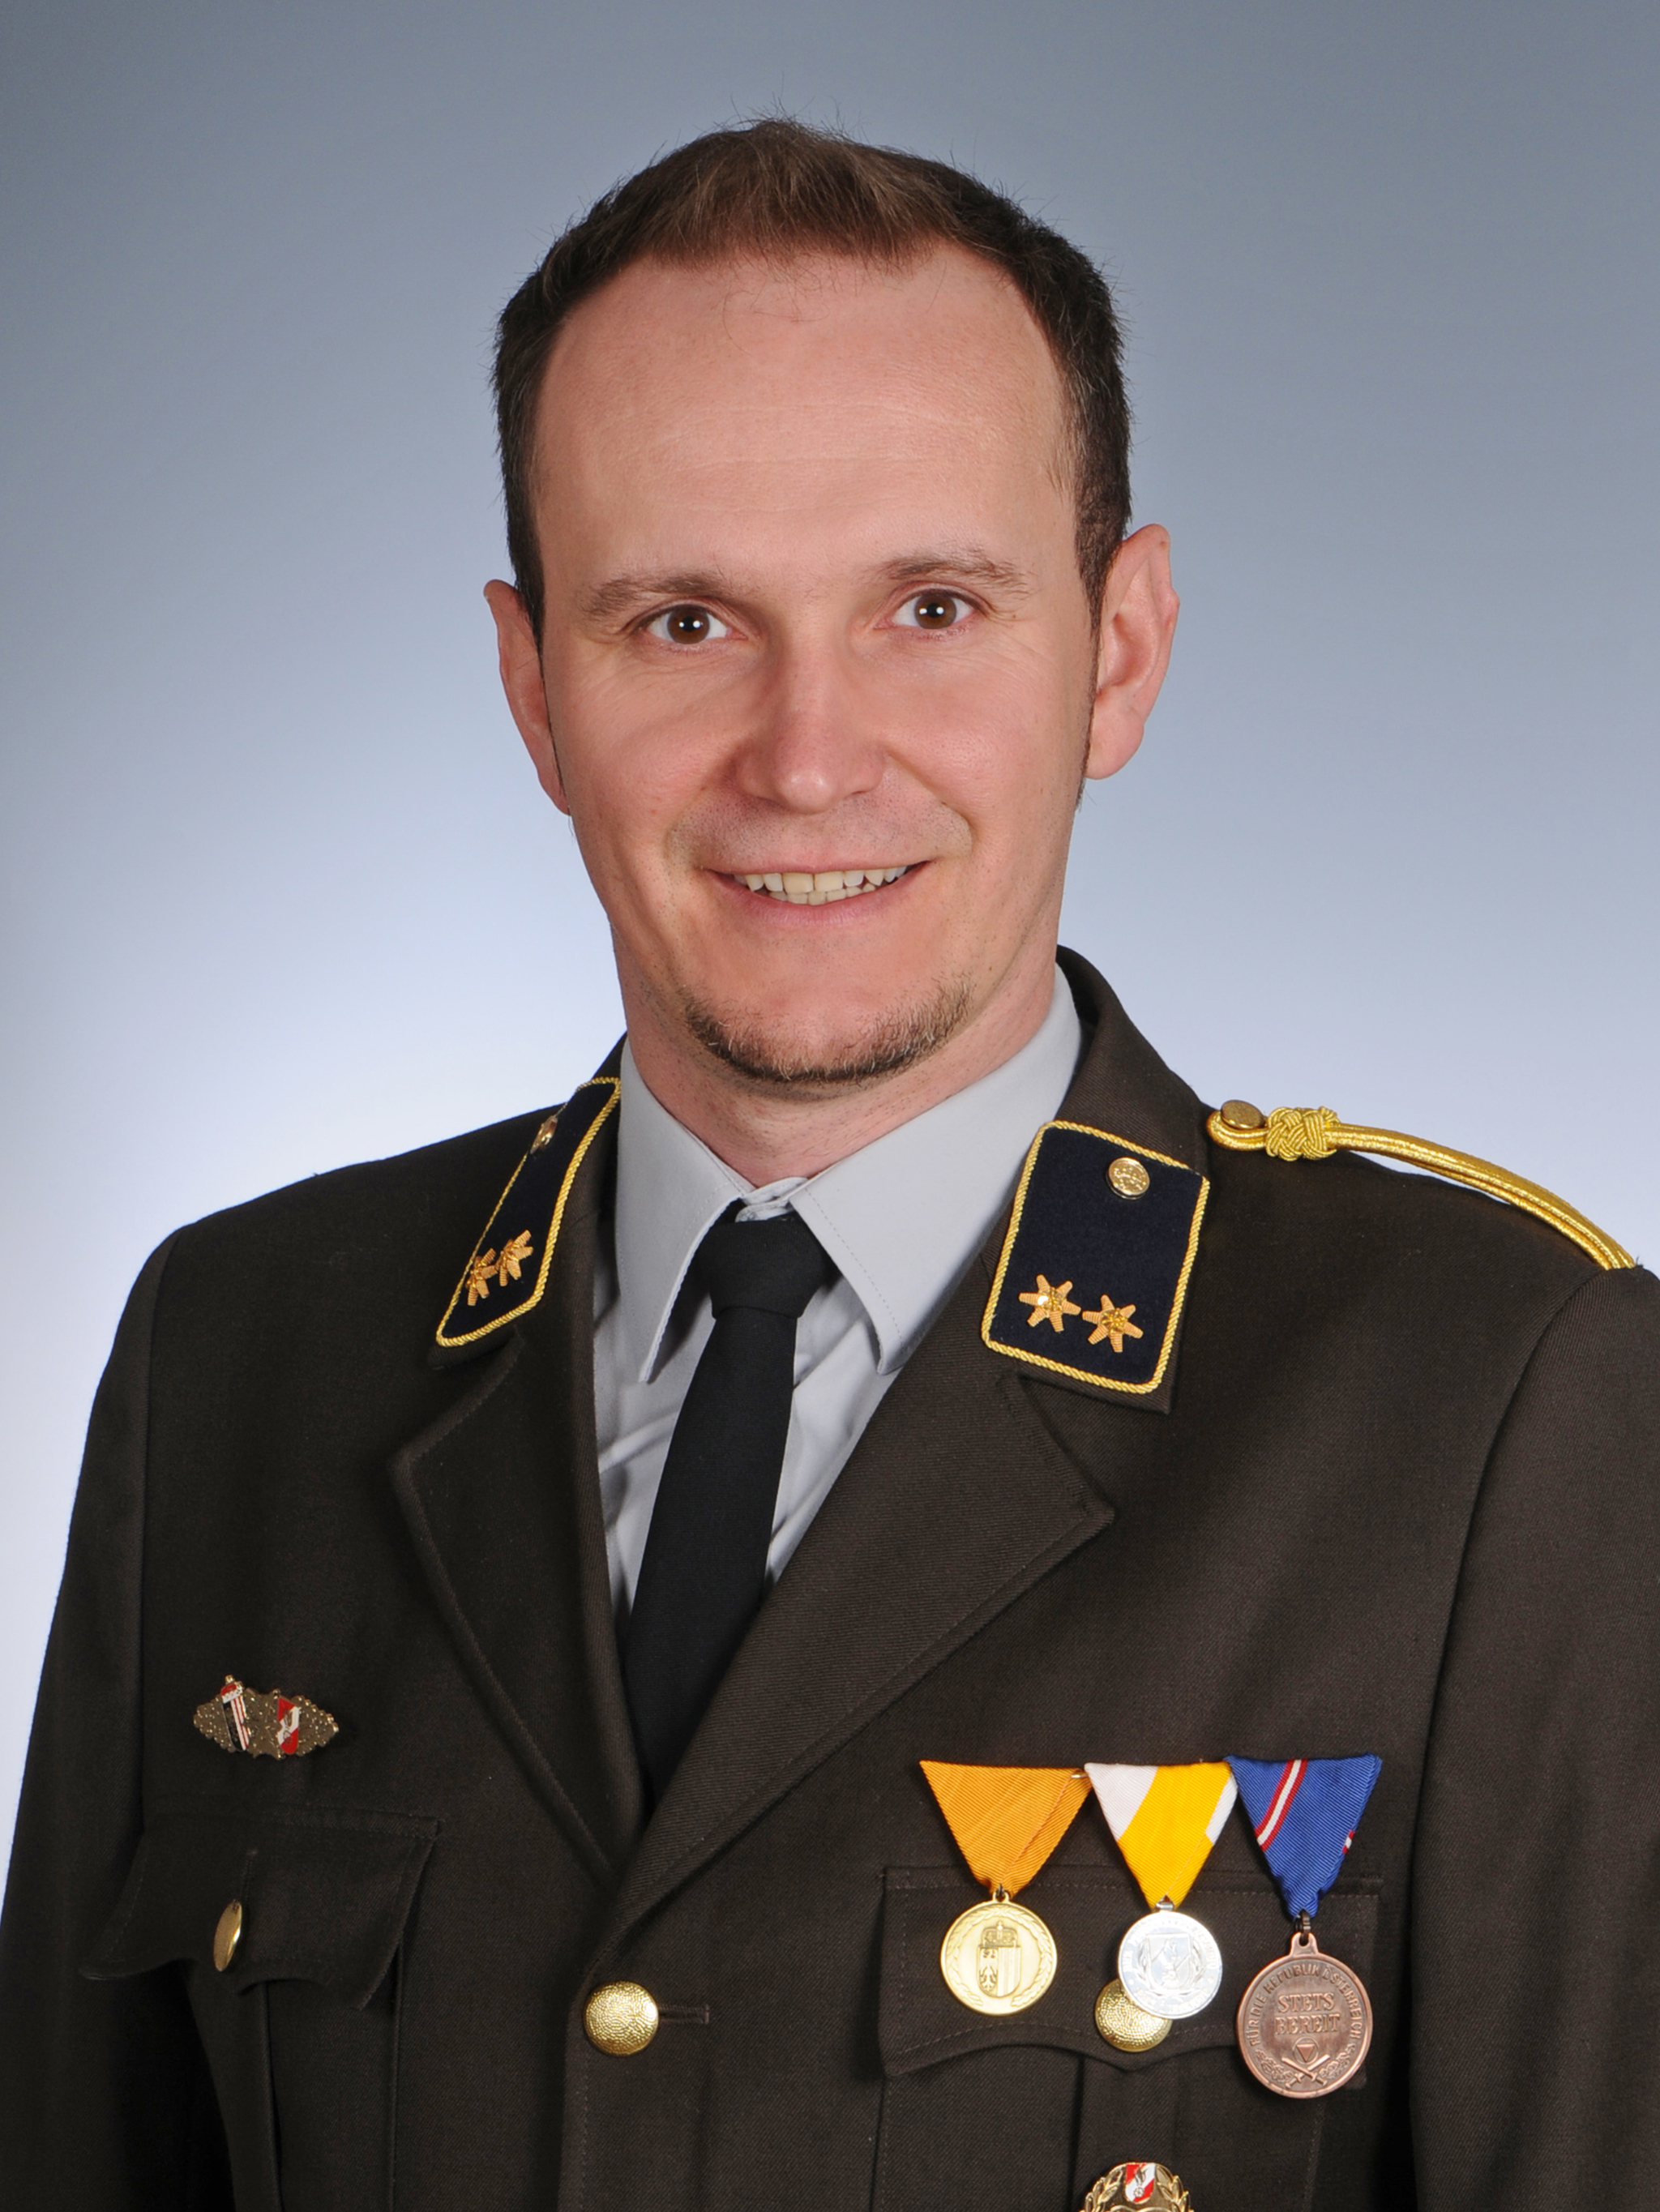 Daniel Wilhelm